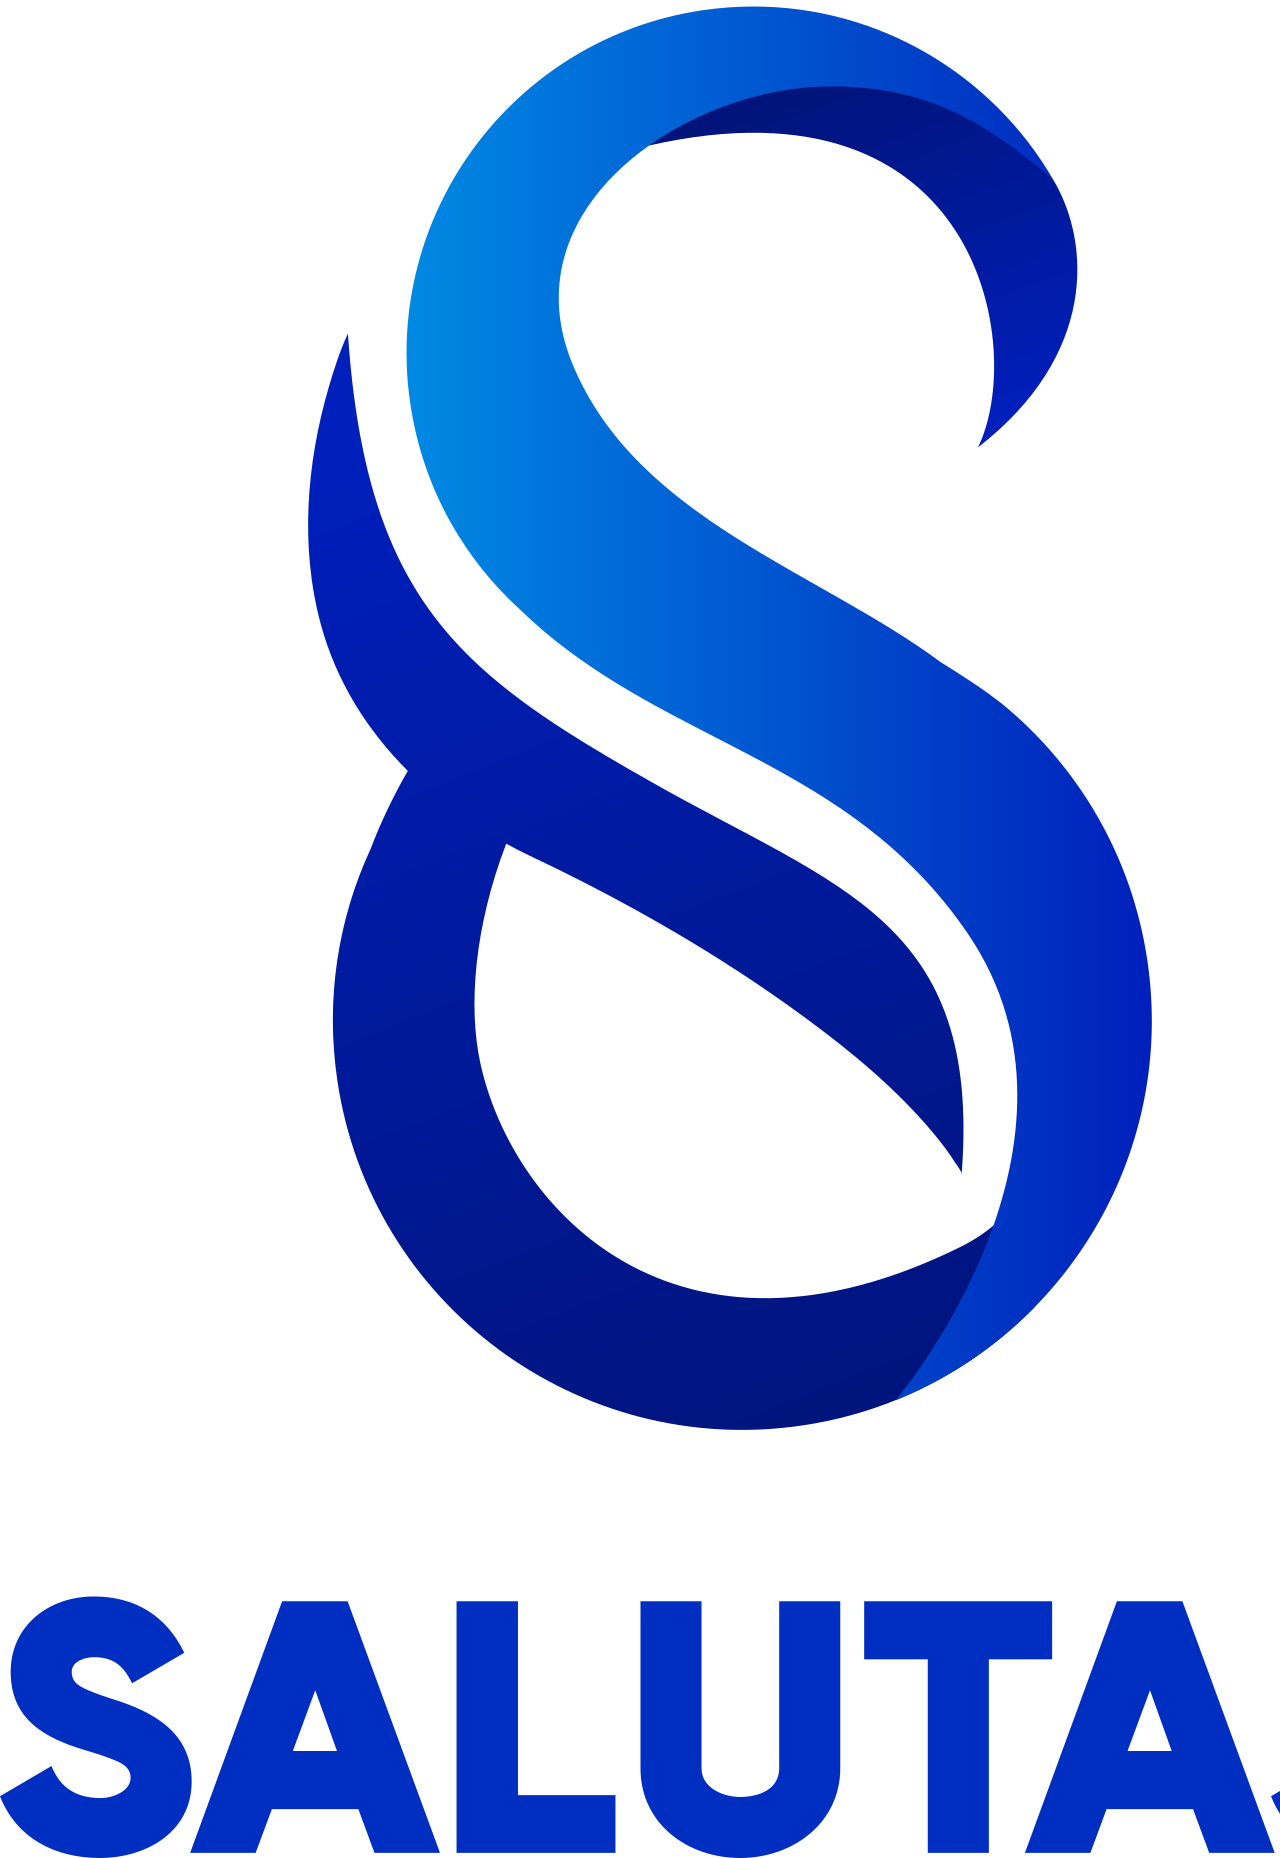 Salutas's logo